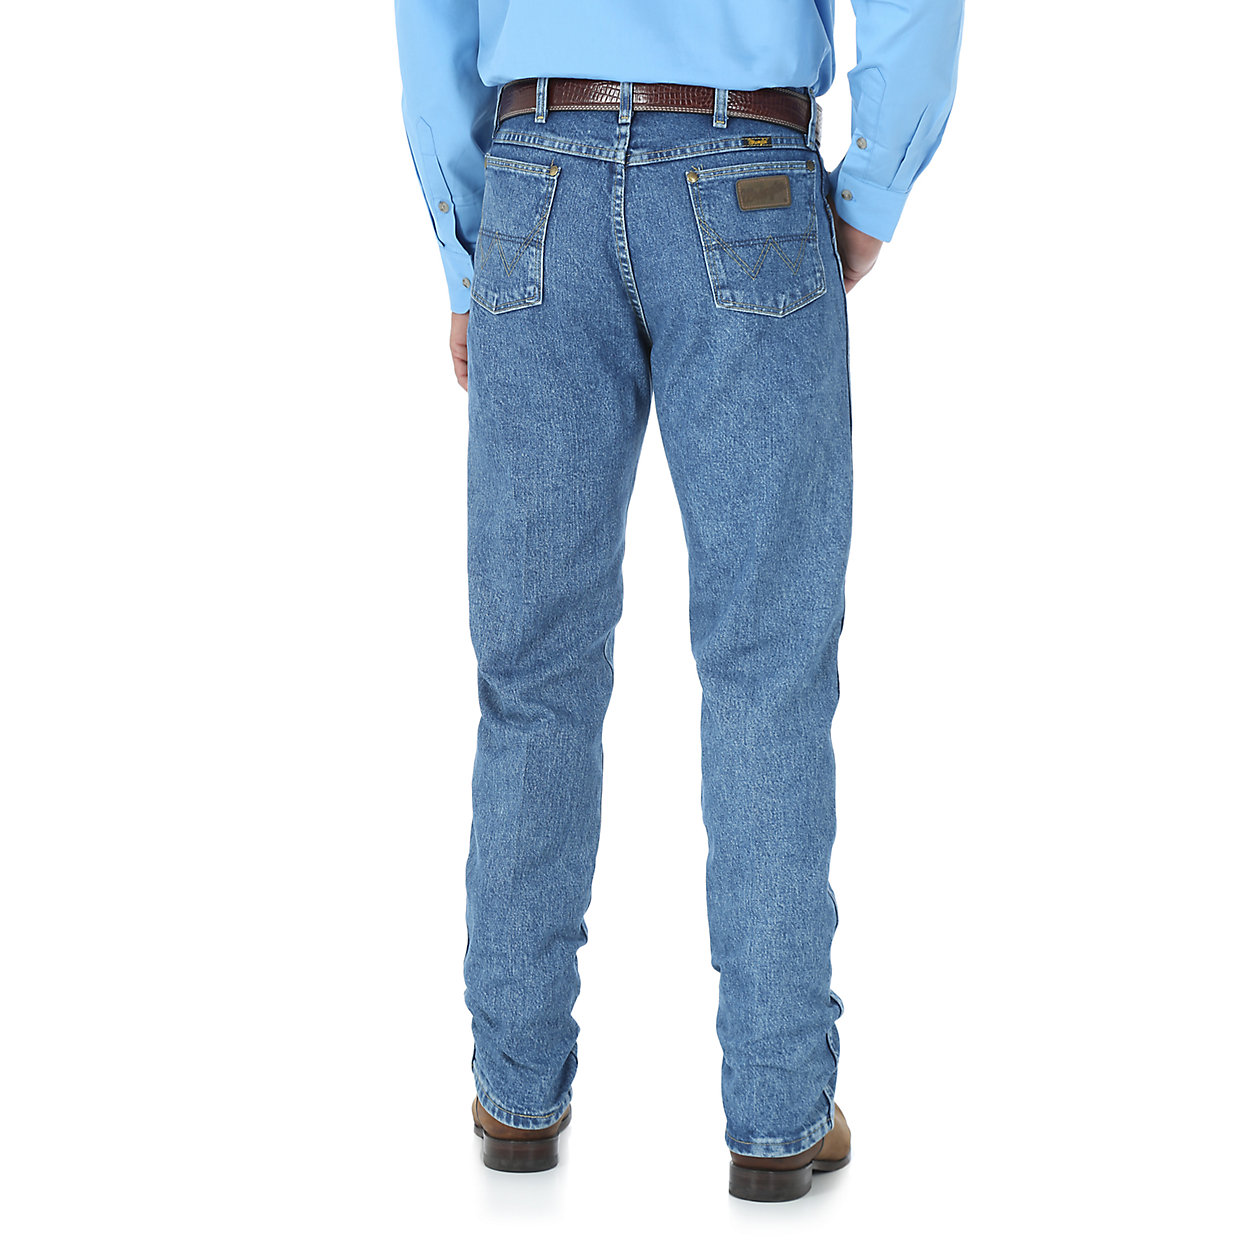 wrangler george strait jeans